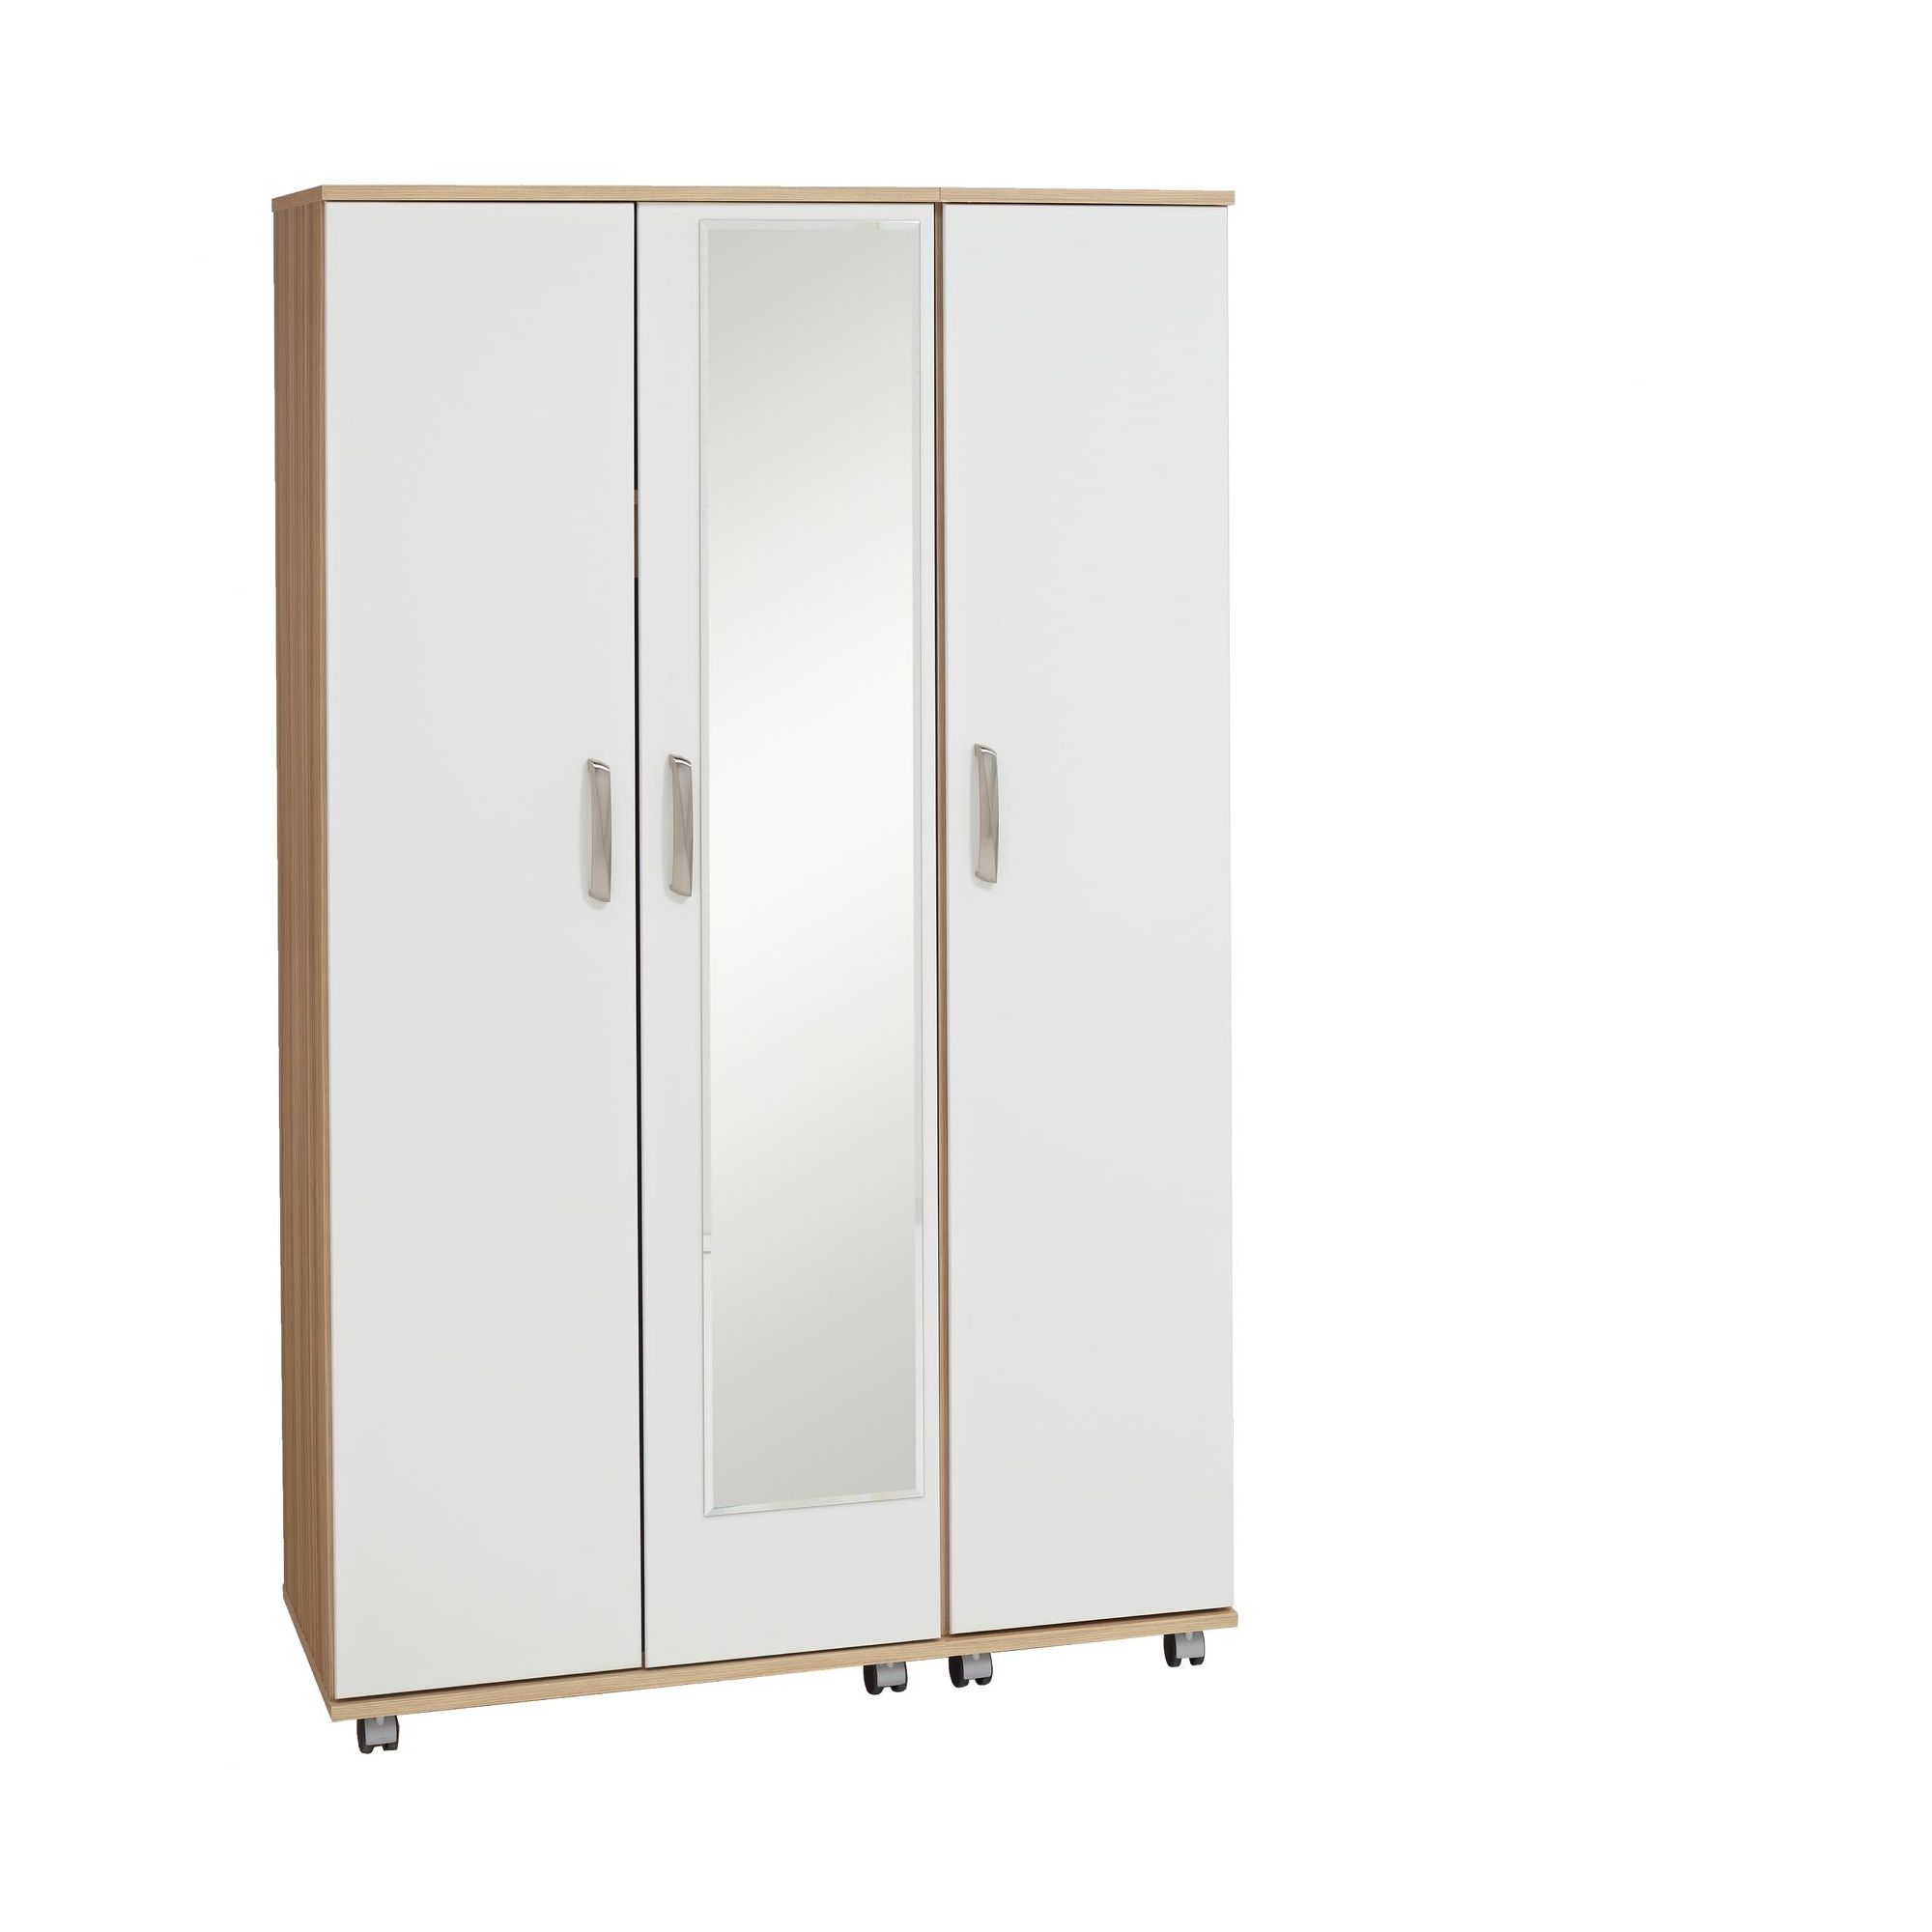 Ideal Furniture Regal Wardrobe Mirror in white at Tescos Direct